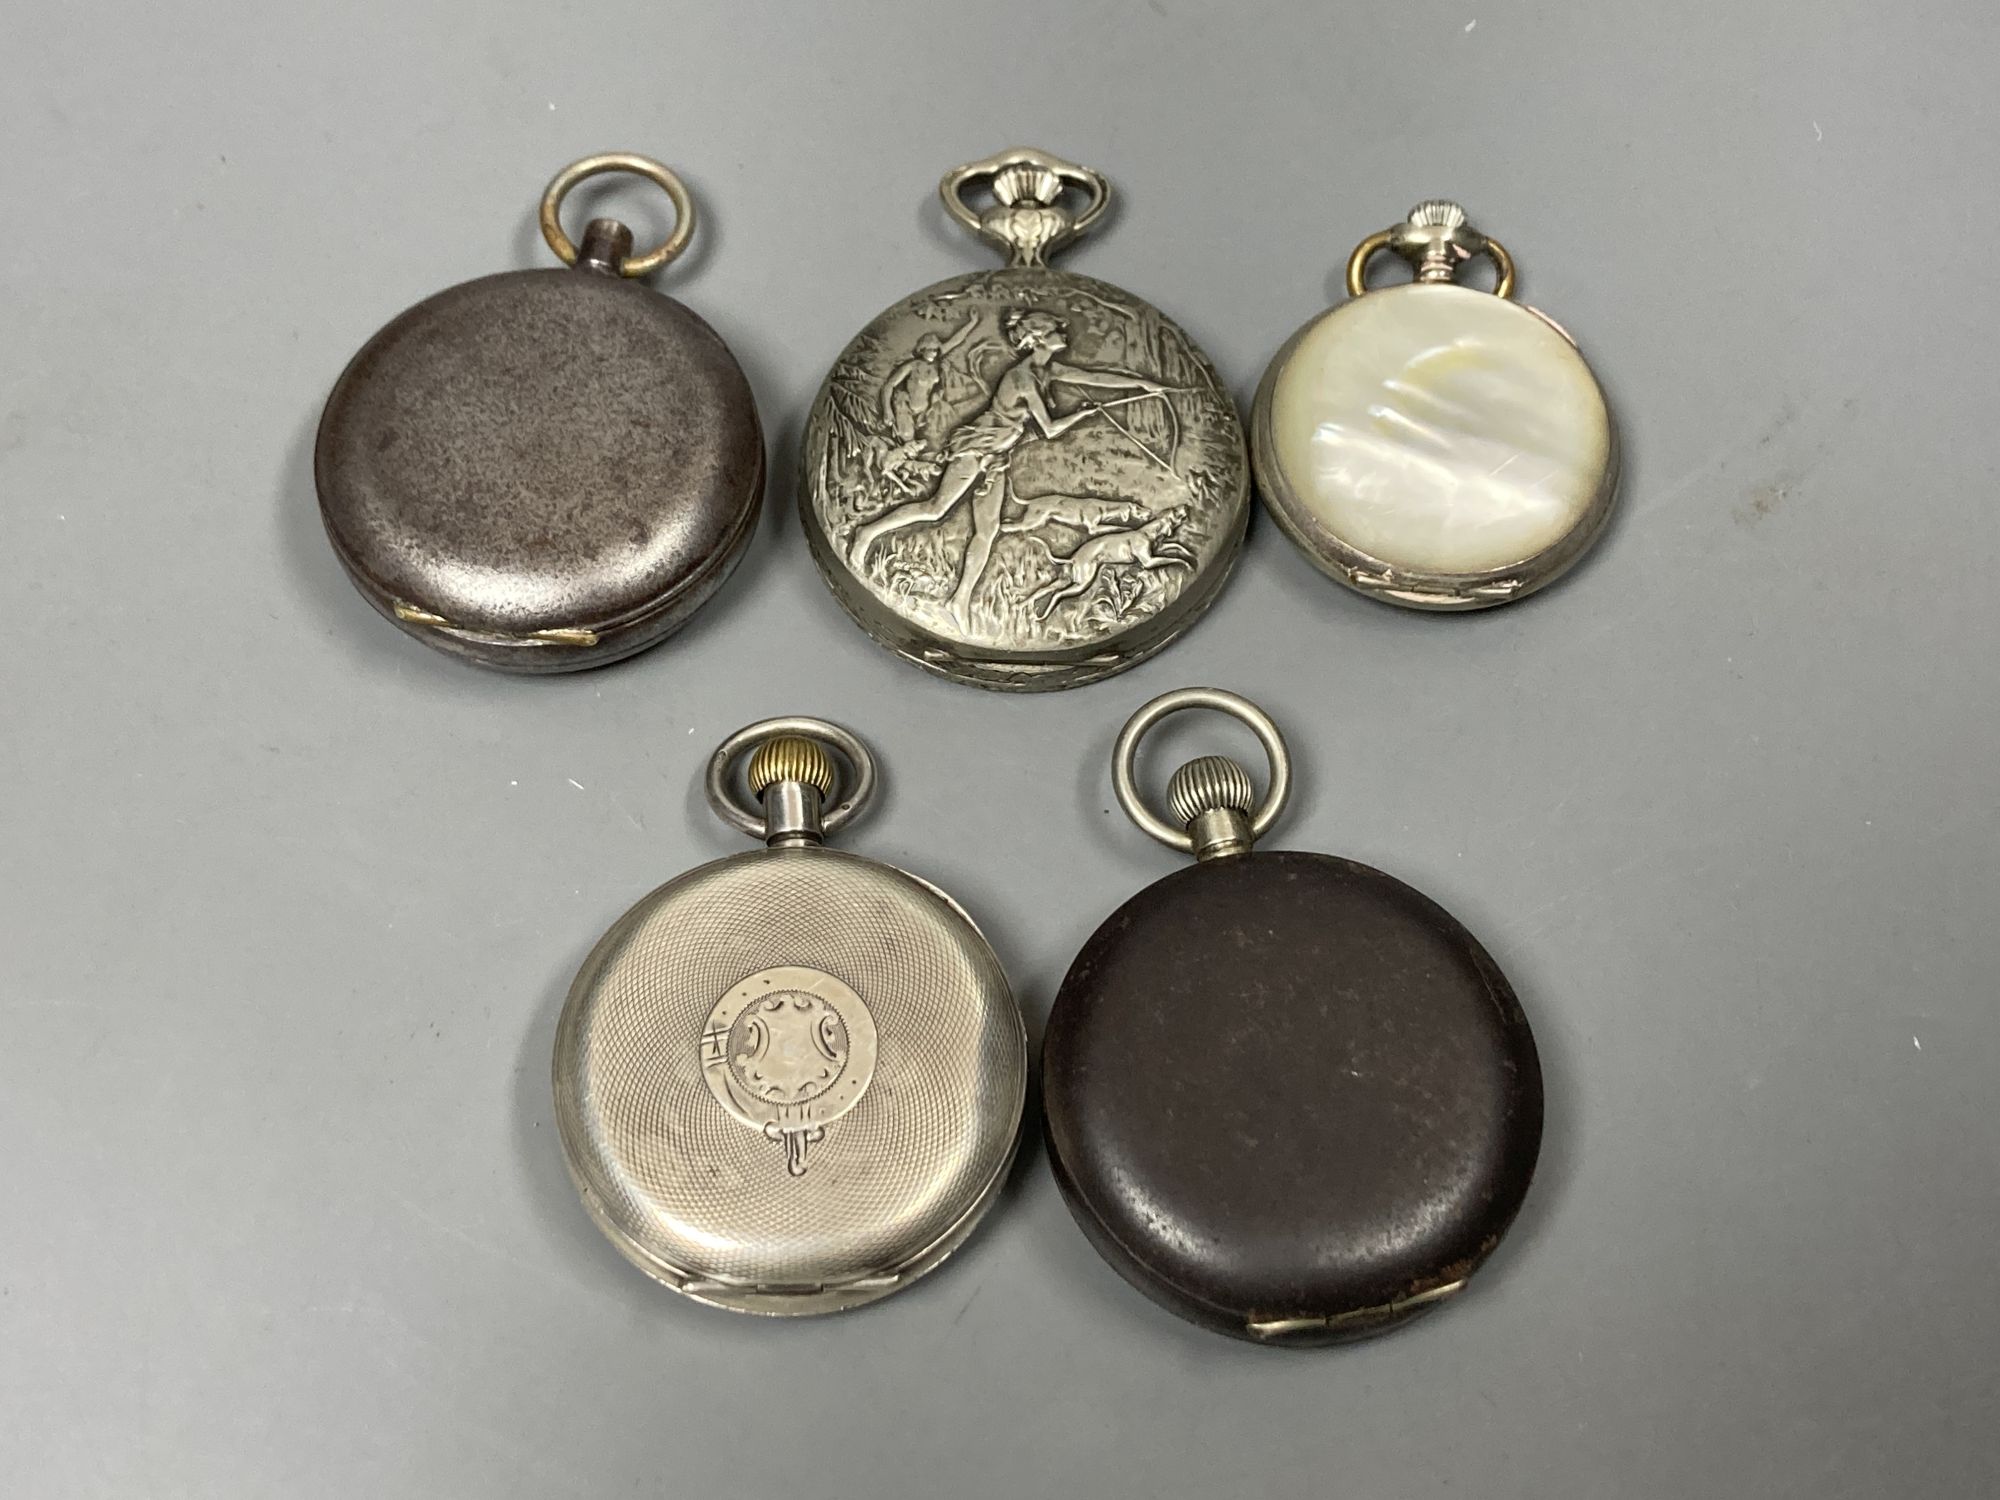 Four assorted base metal Hebdomas pocket watches and a silver Hebdomas pocket watch